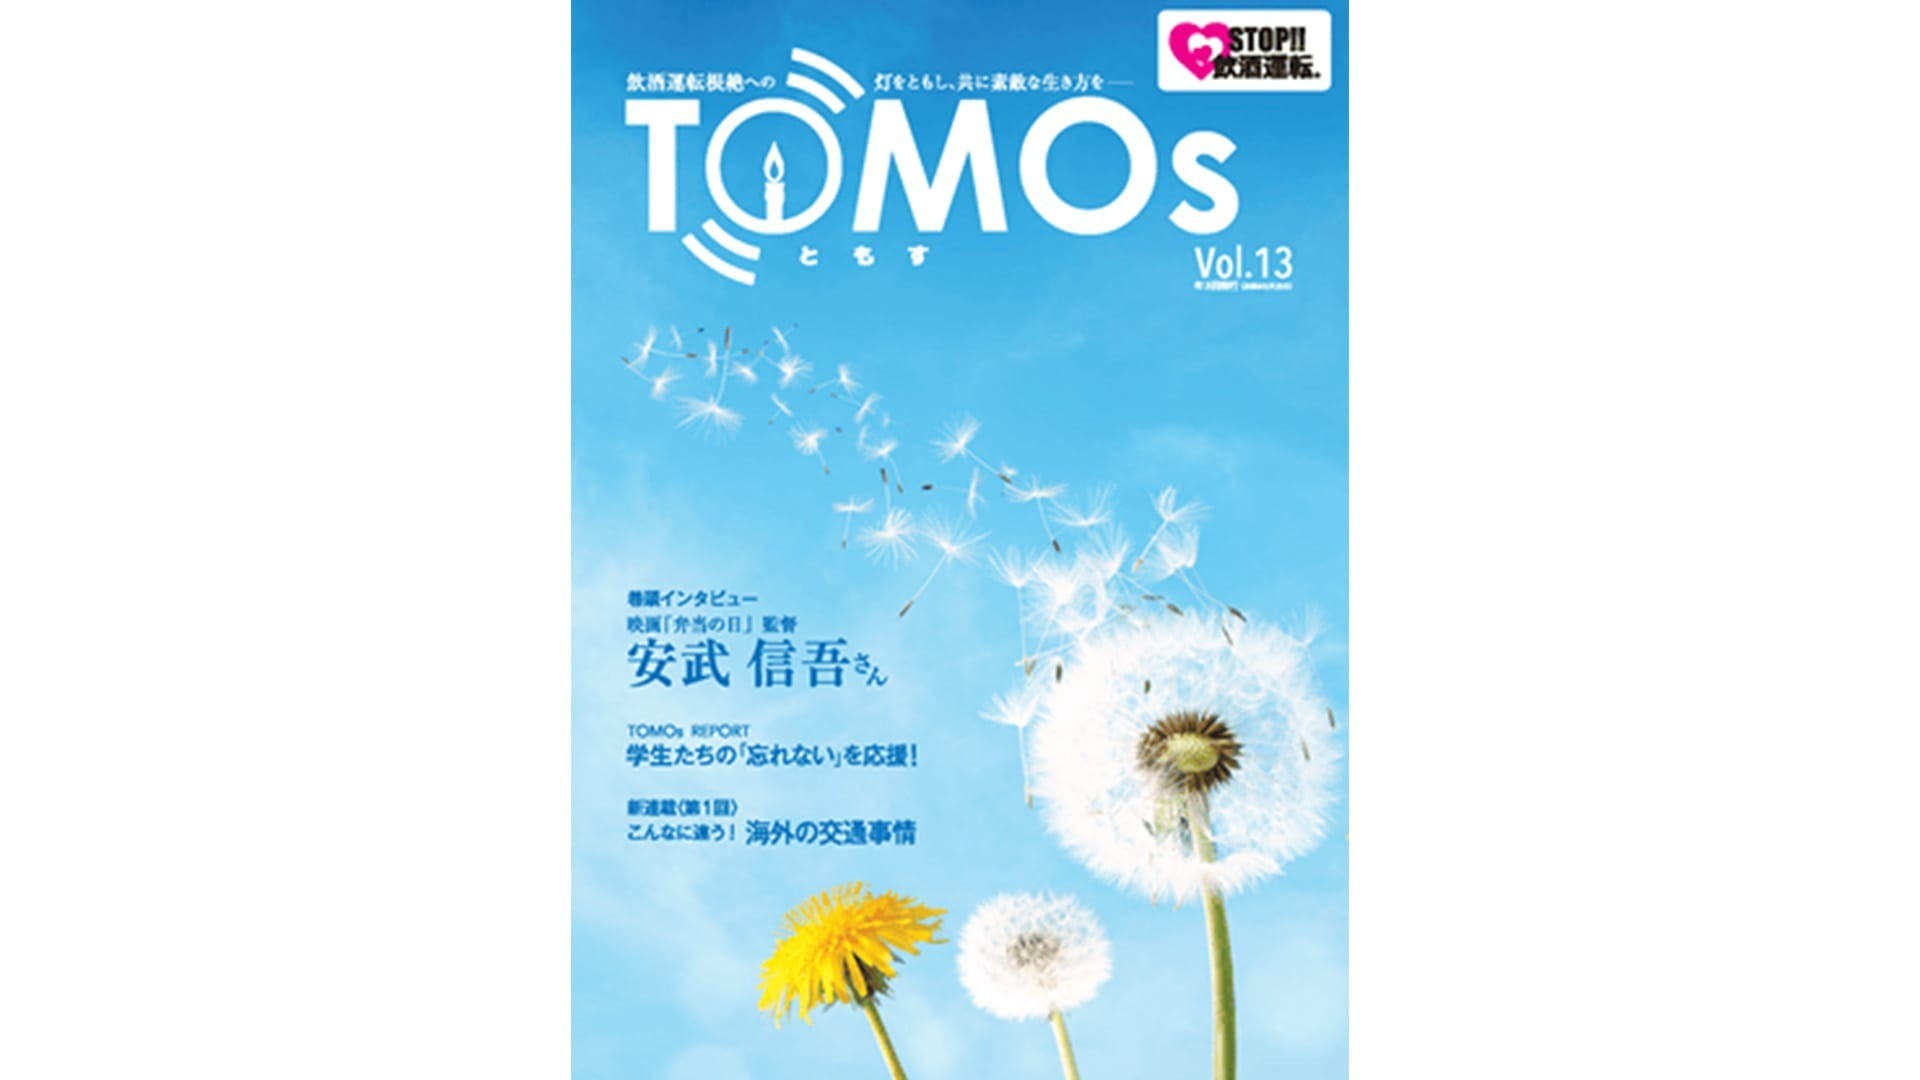 TOMOs vol.13 映画「弁当の日」監督